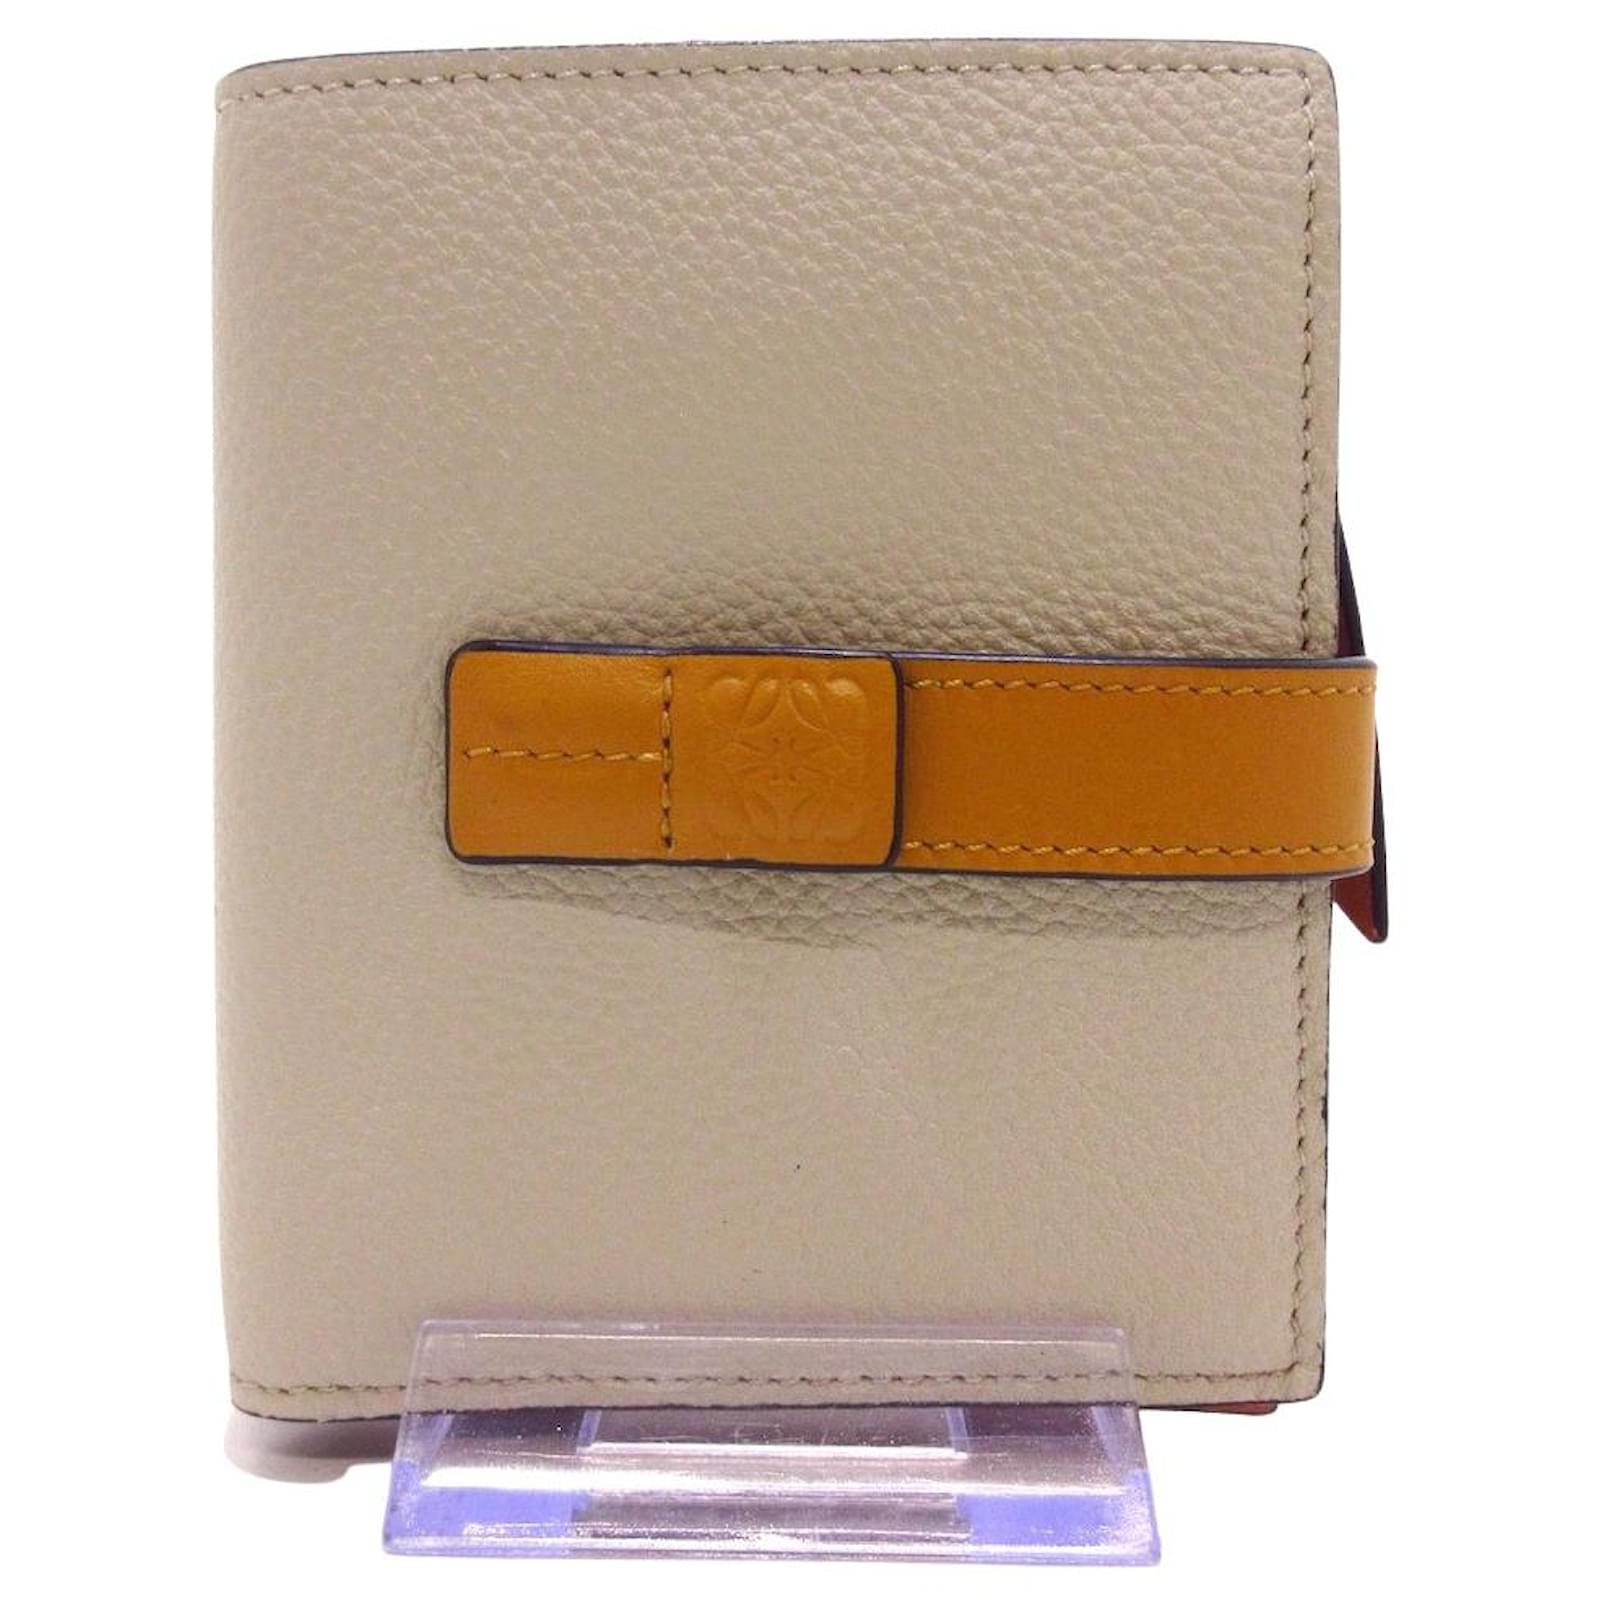 Loewe Compact Leather Zip Wallet